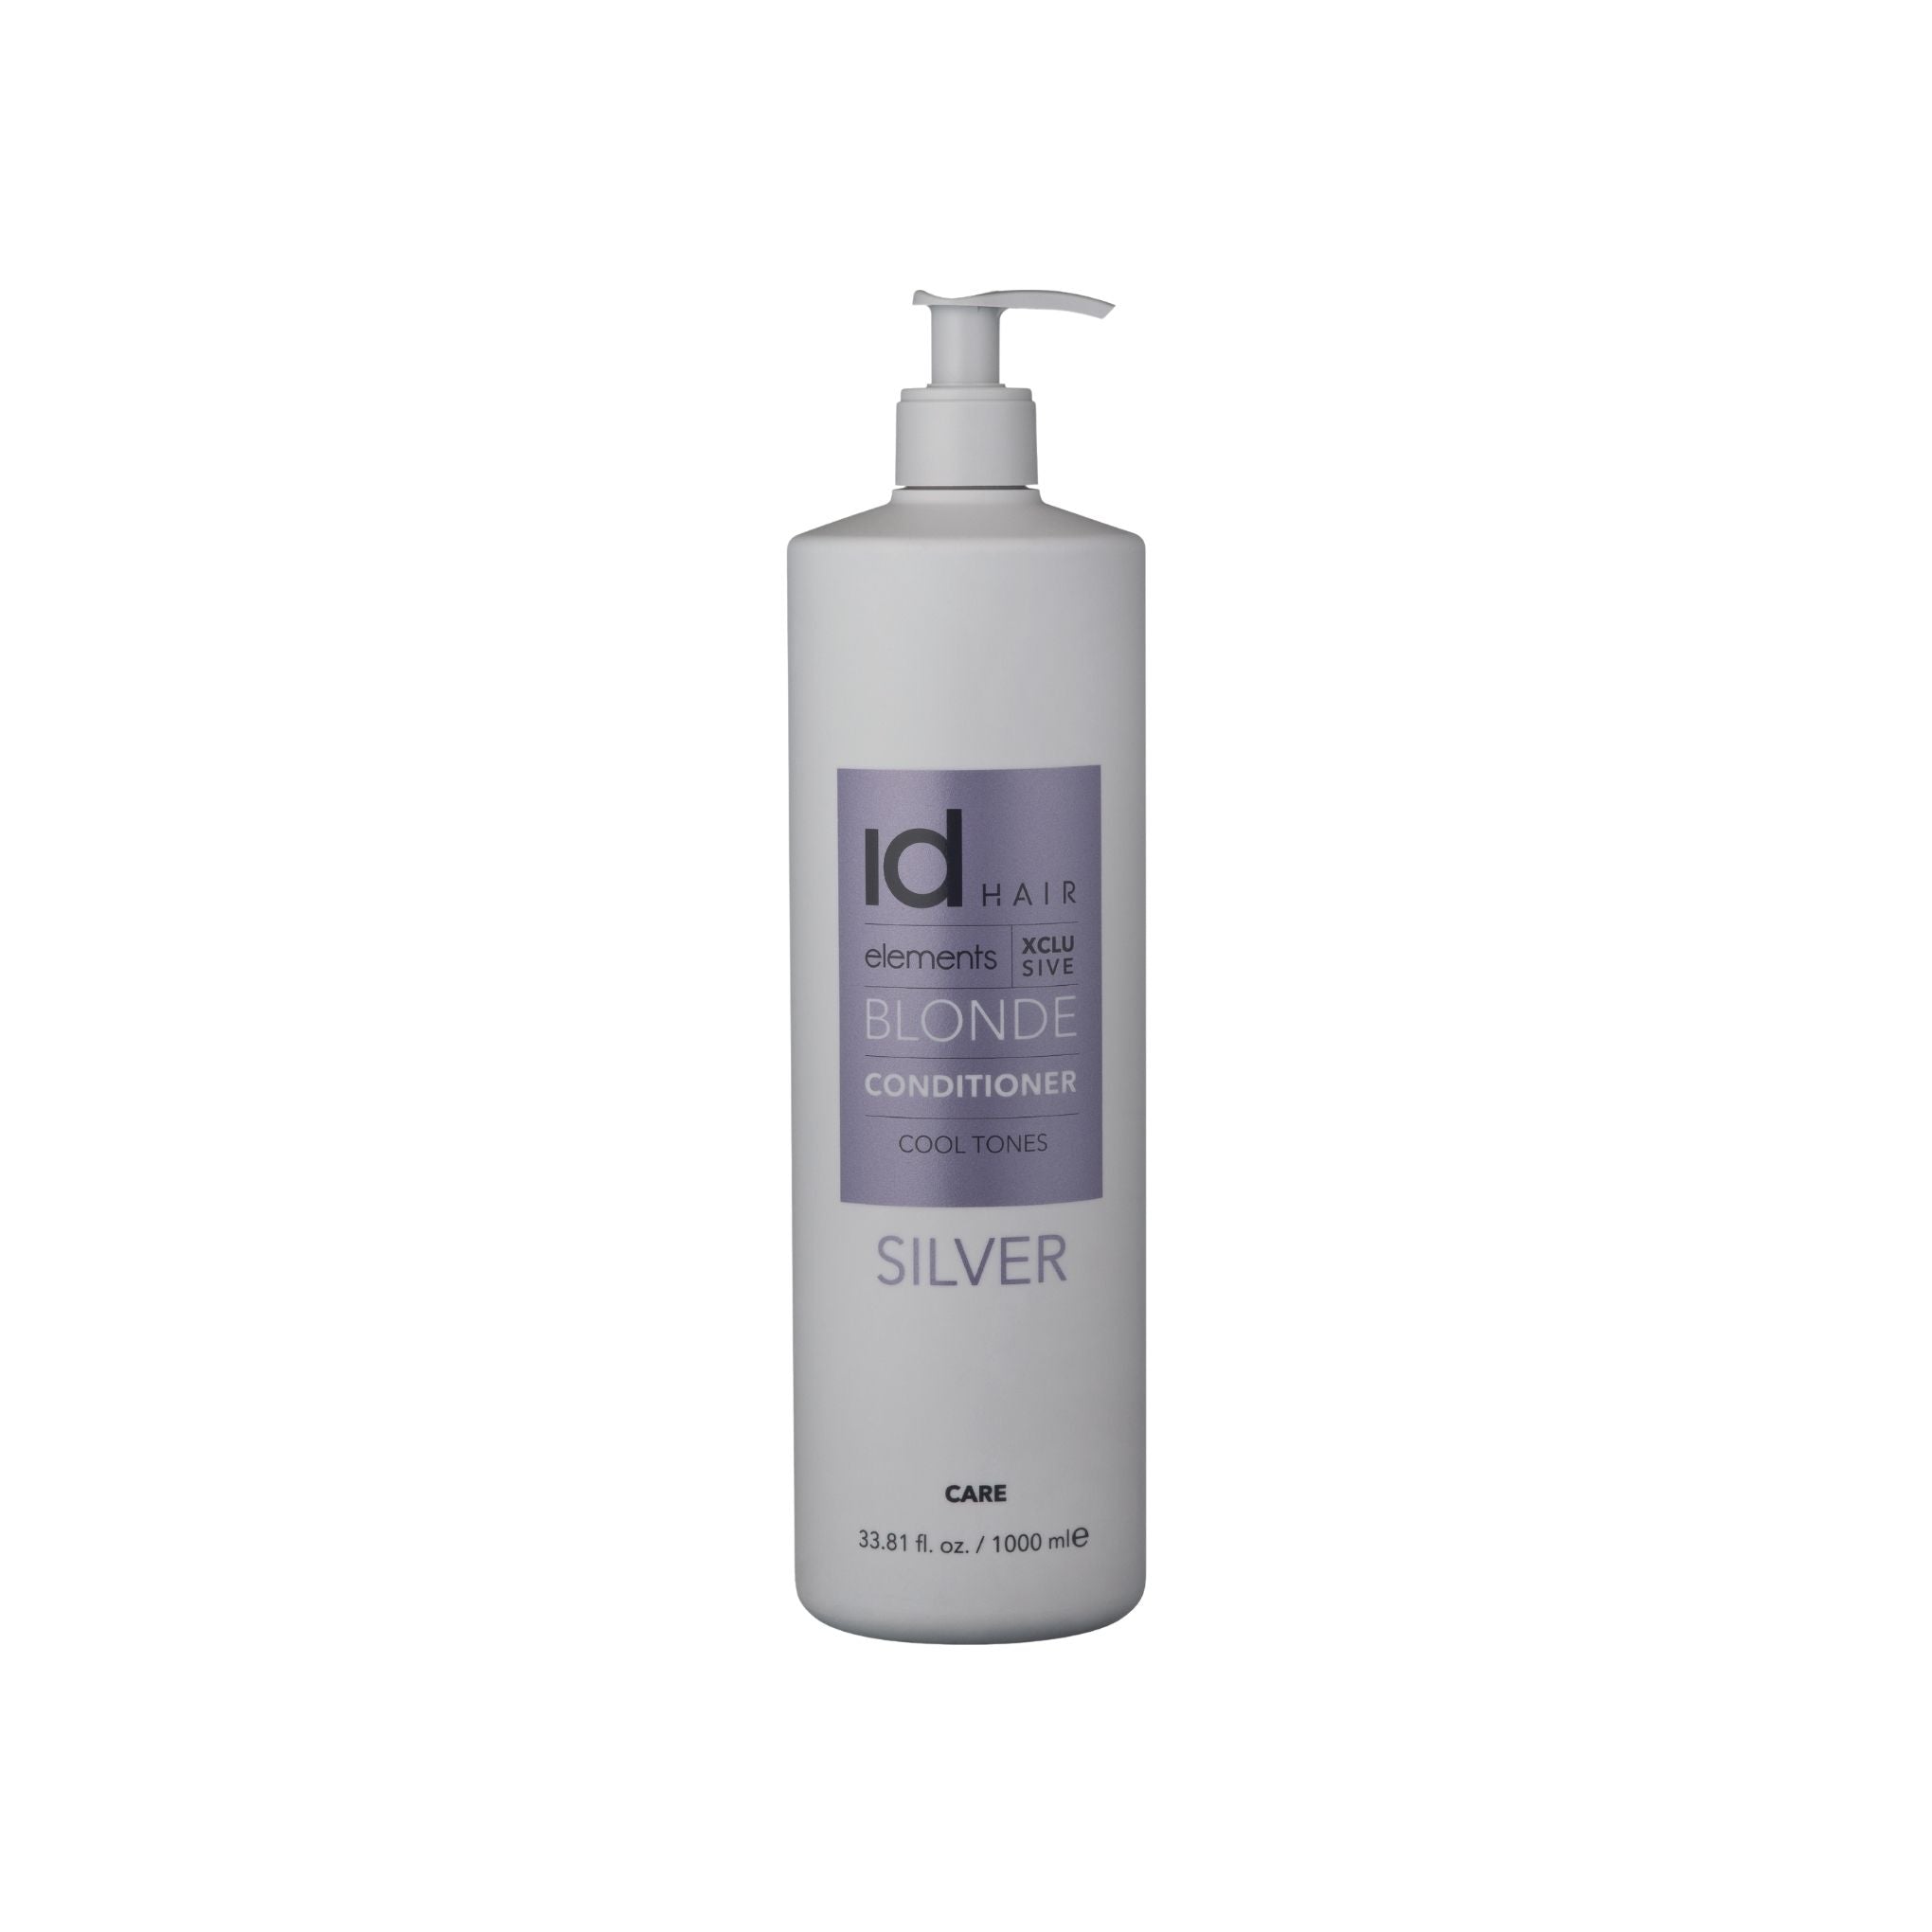 Elements Xclusive Blonde Conditioner - Silver